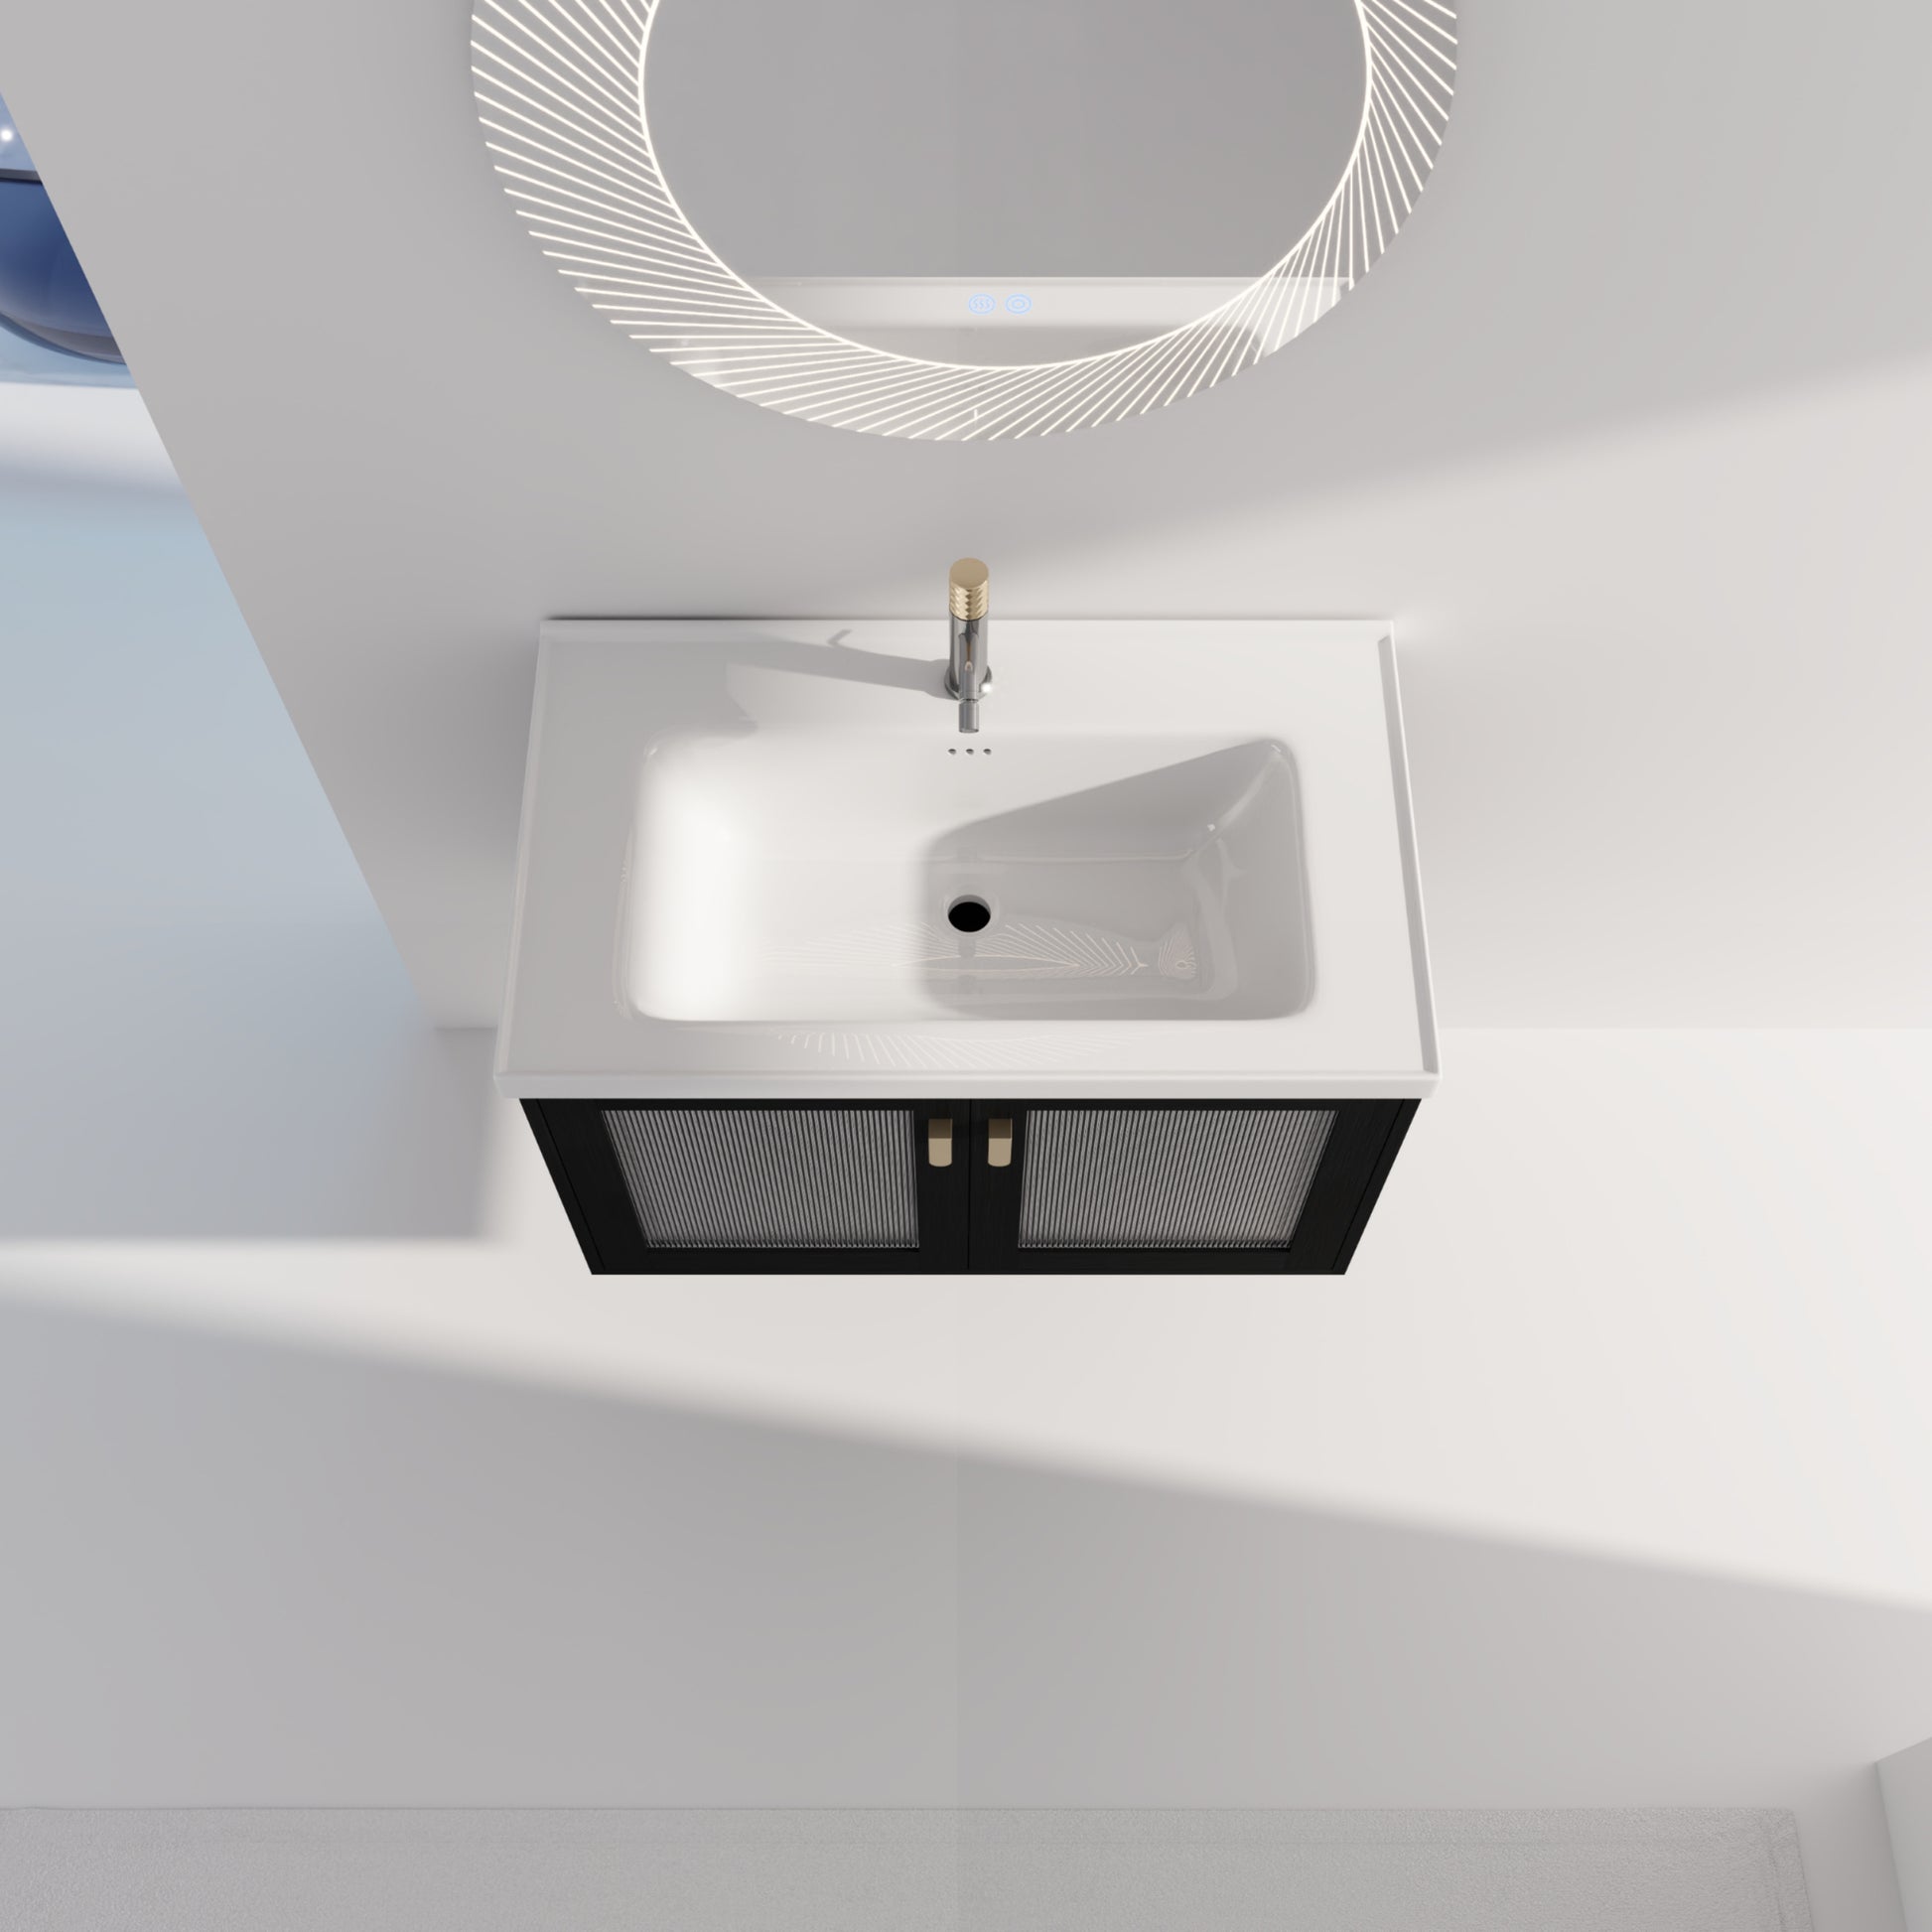 32 Inch Wall Mounted Bathroom Vanity With Sink, For black-2-bathroom-wall mounted-modern-plywood